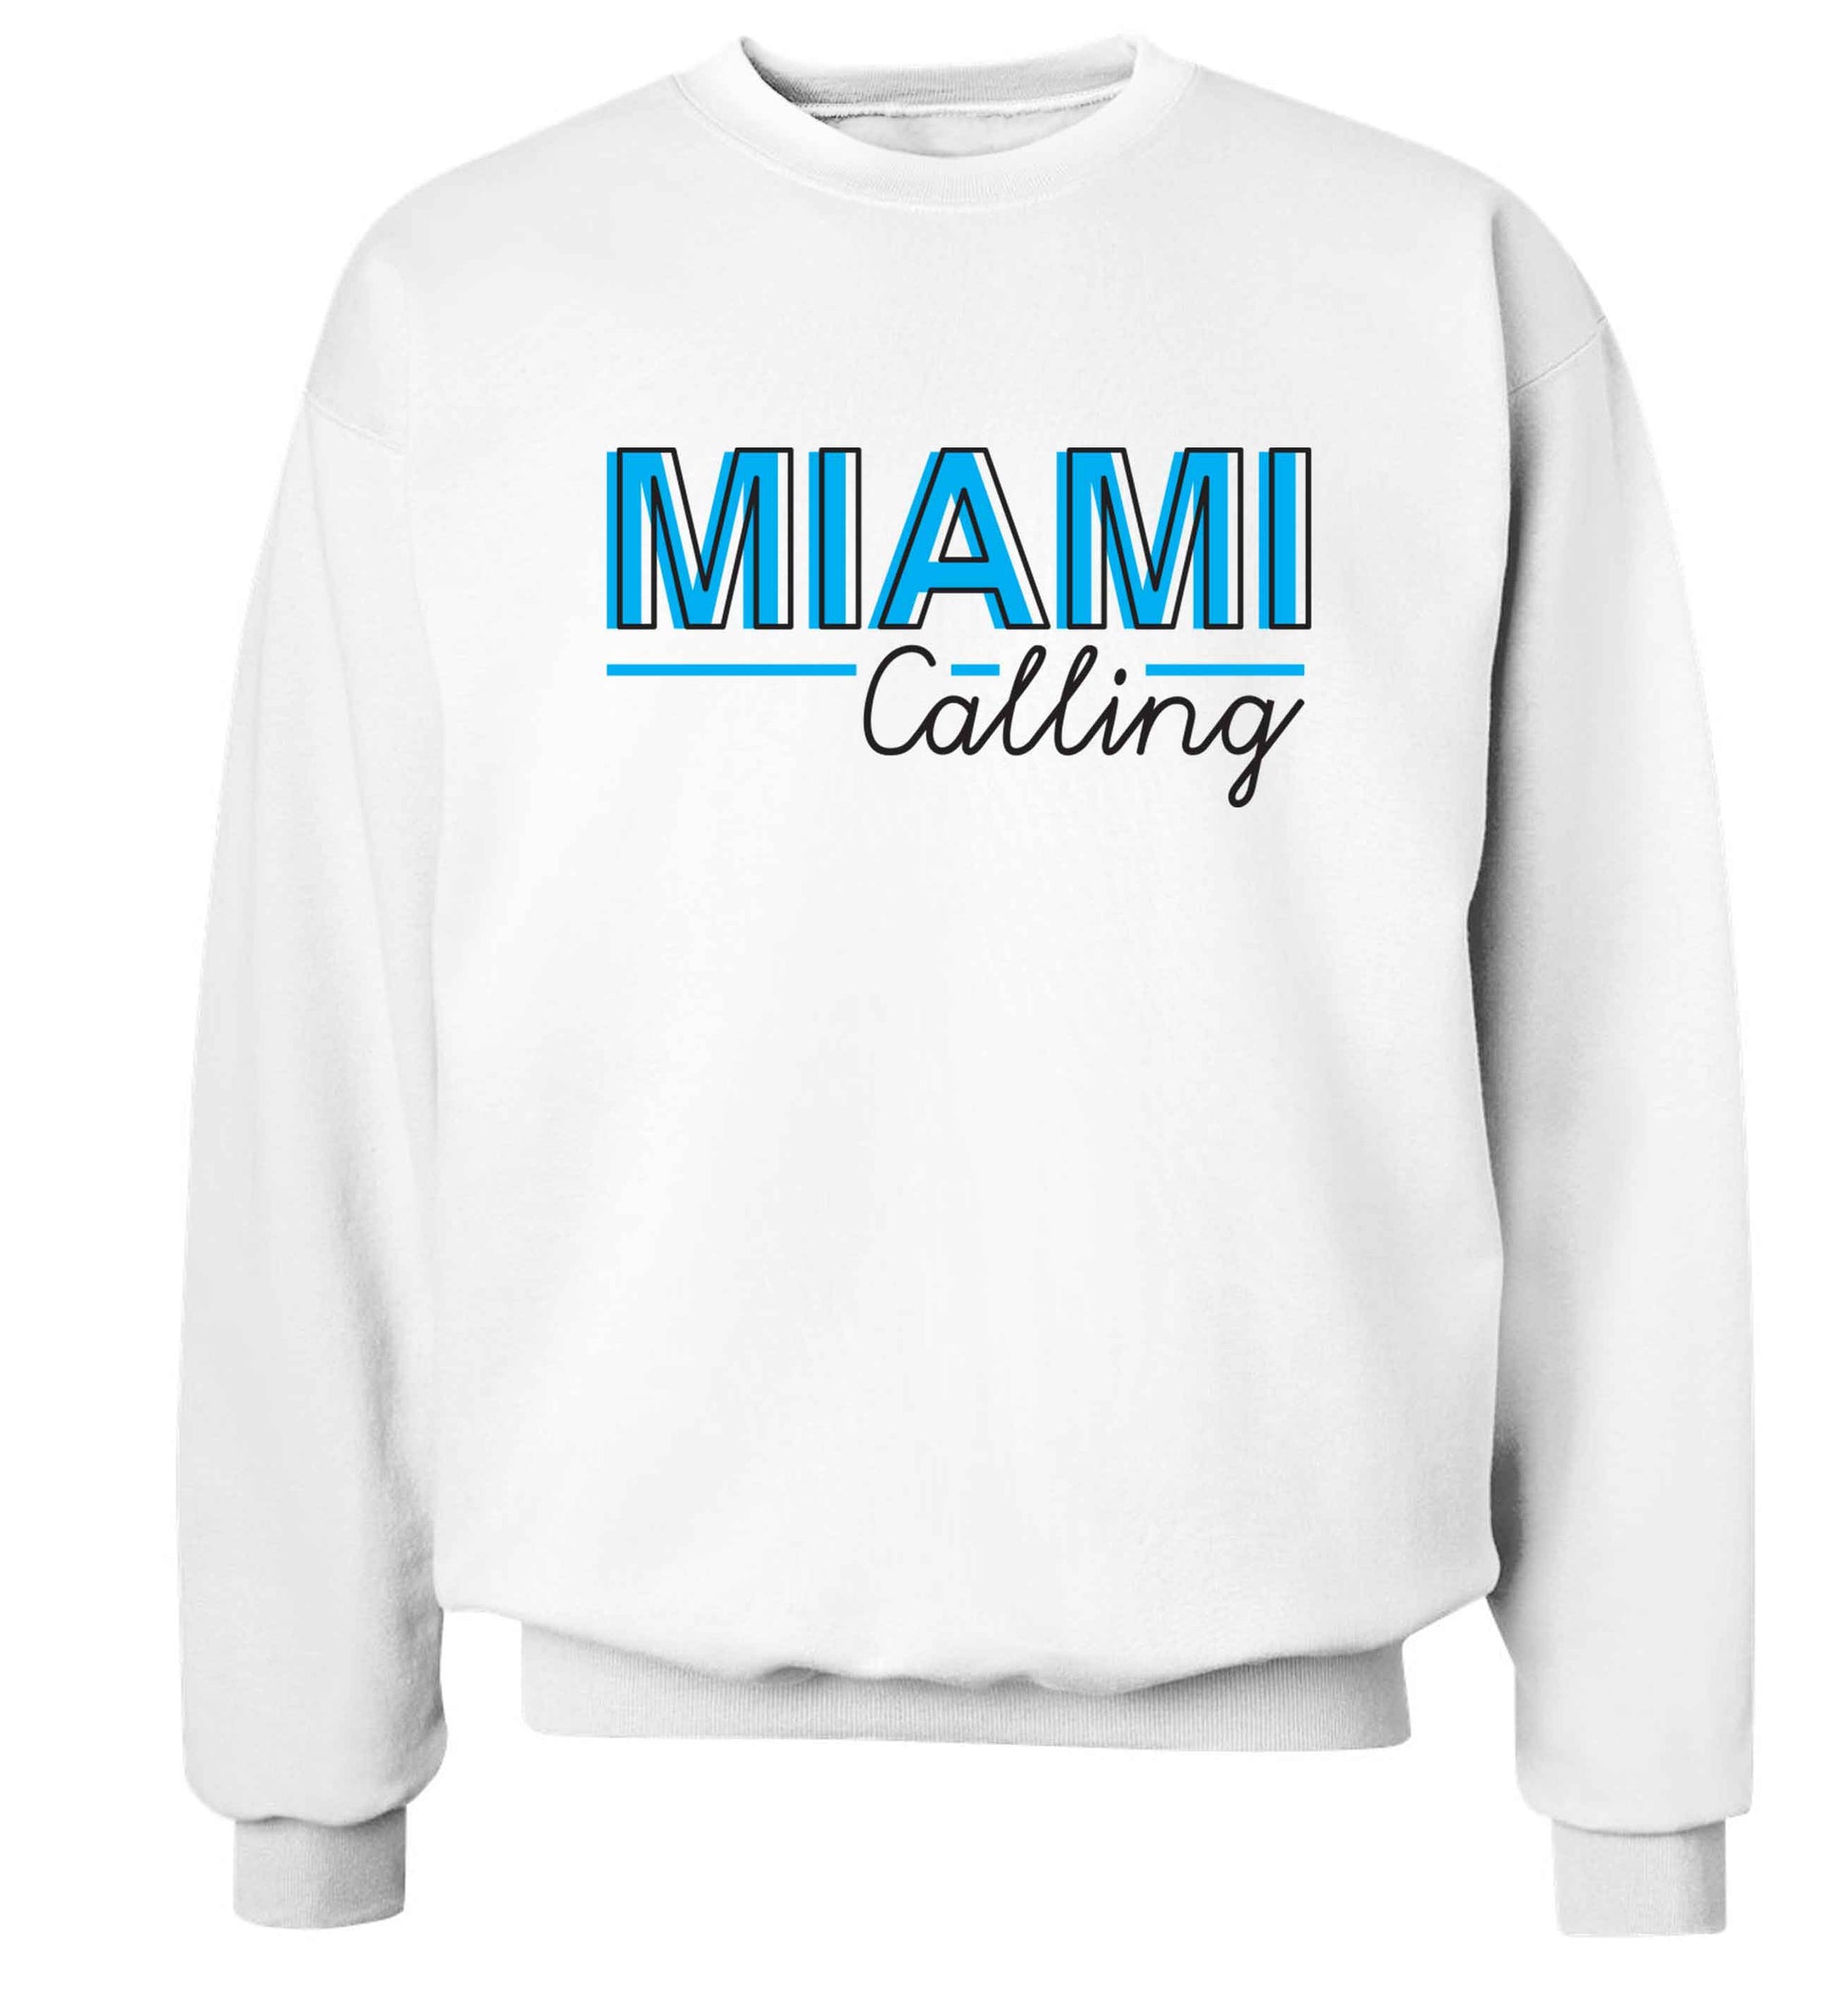 Miami calling Adult's unisex white Sweater 2XL